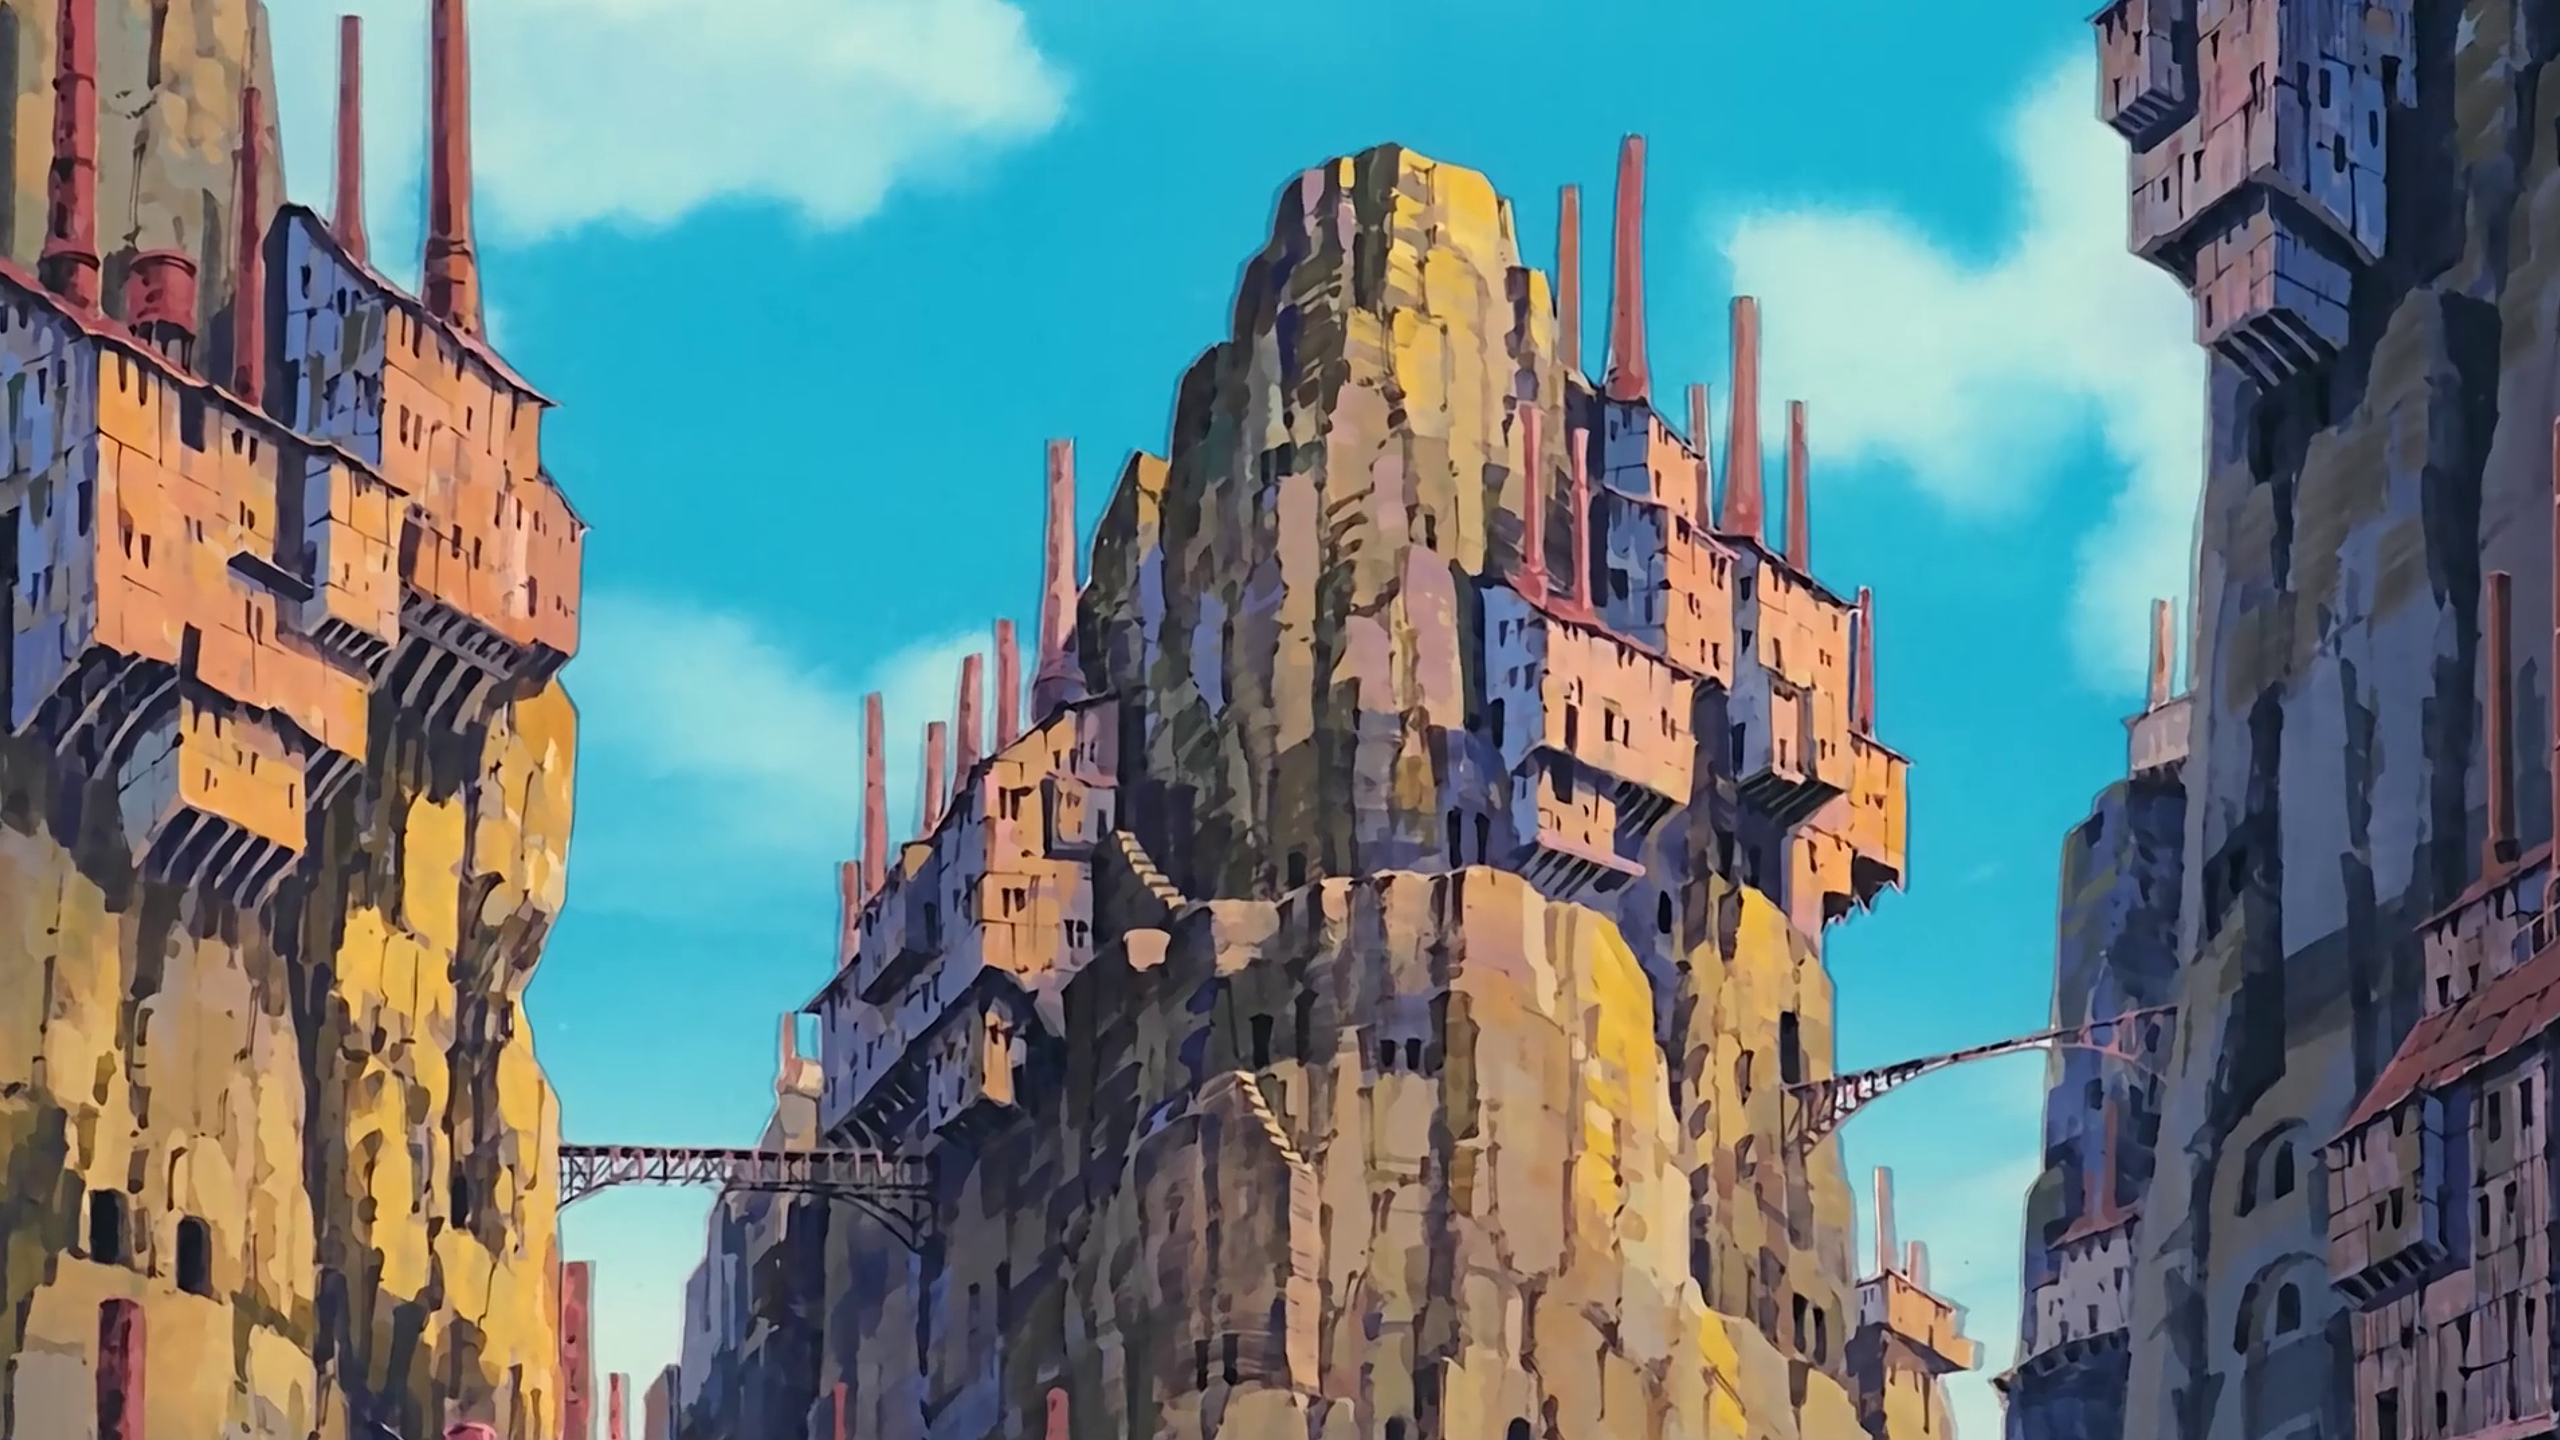 2560x1440 100 Studio Ghibli wallpapers Album on Imgur | Studio ghibli background, Castle in the sky, Hayao miyazaki